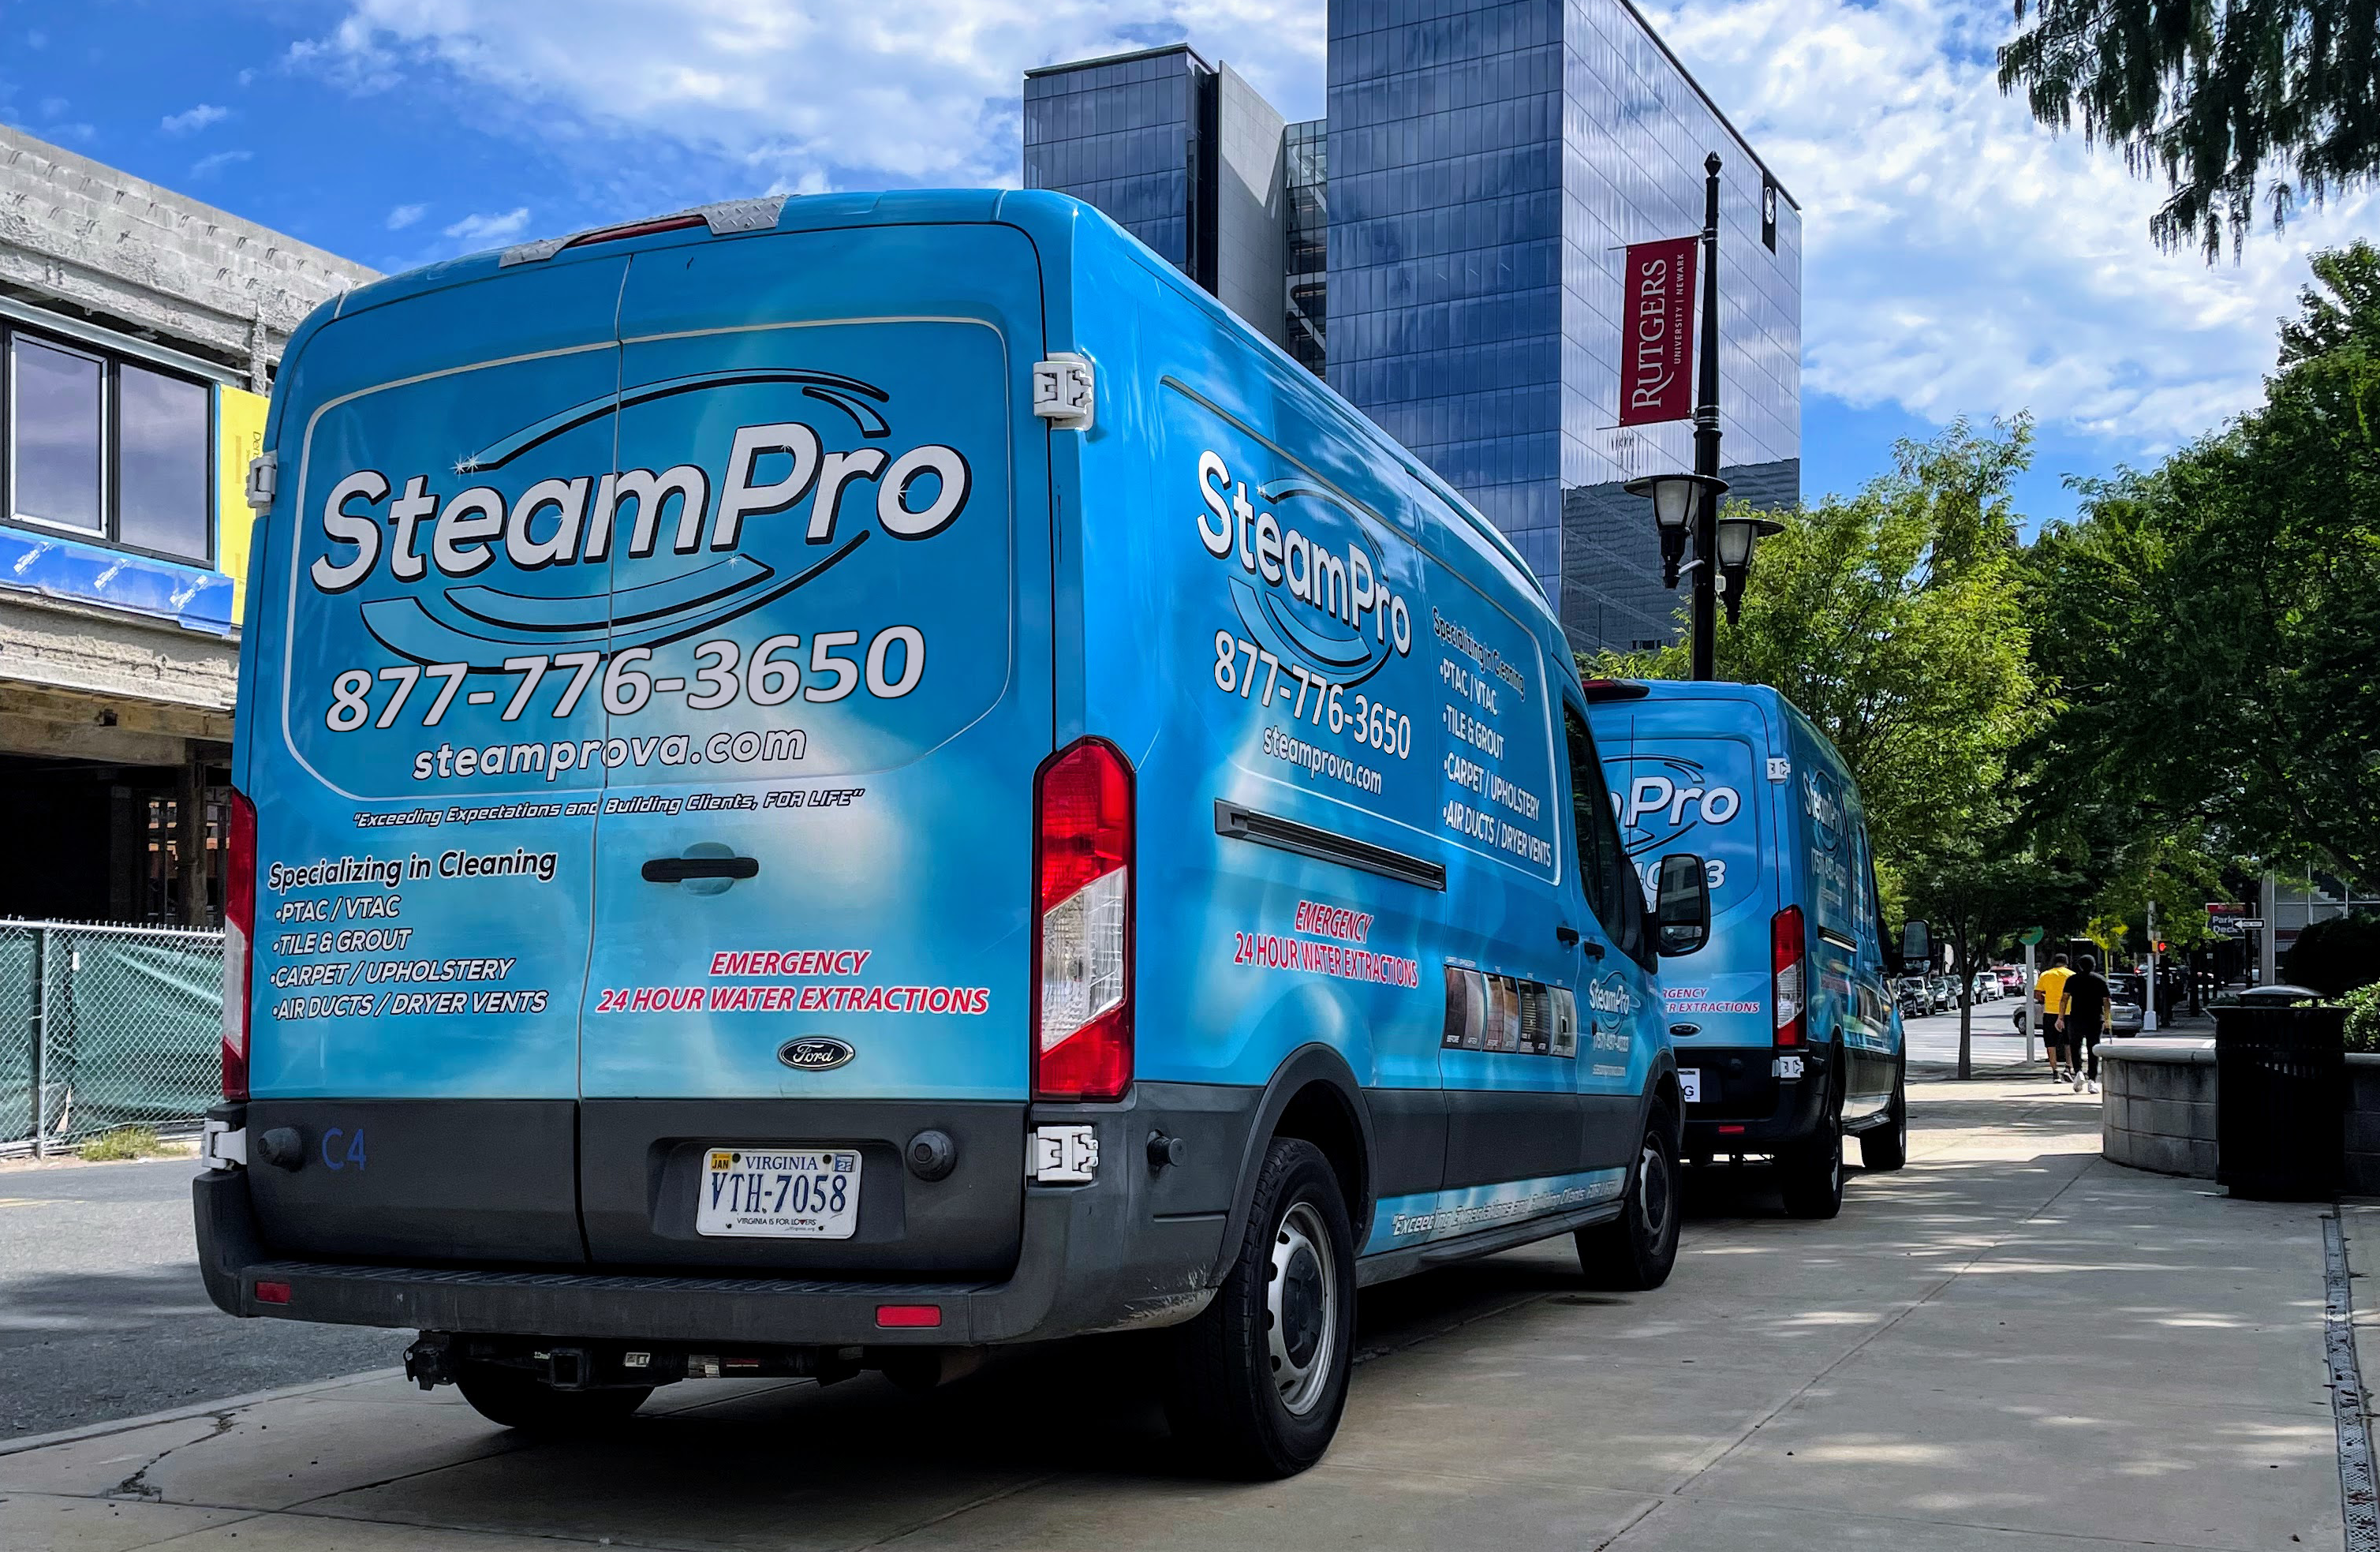 Steam Pro vans at Rutgers University